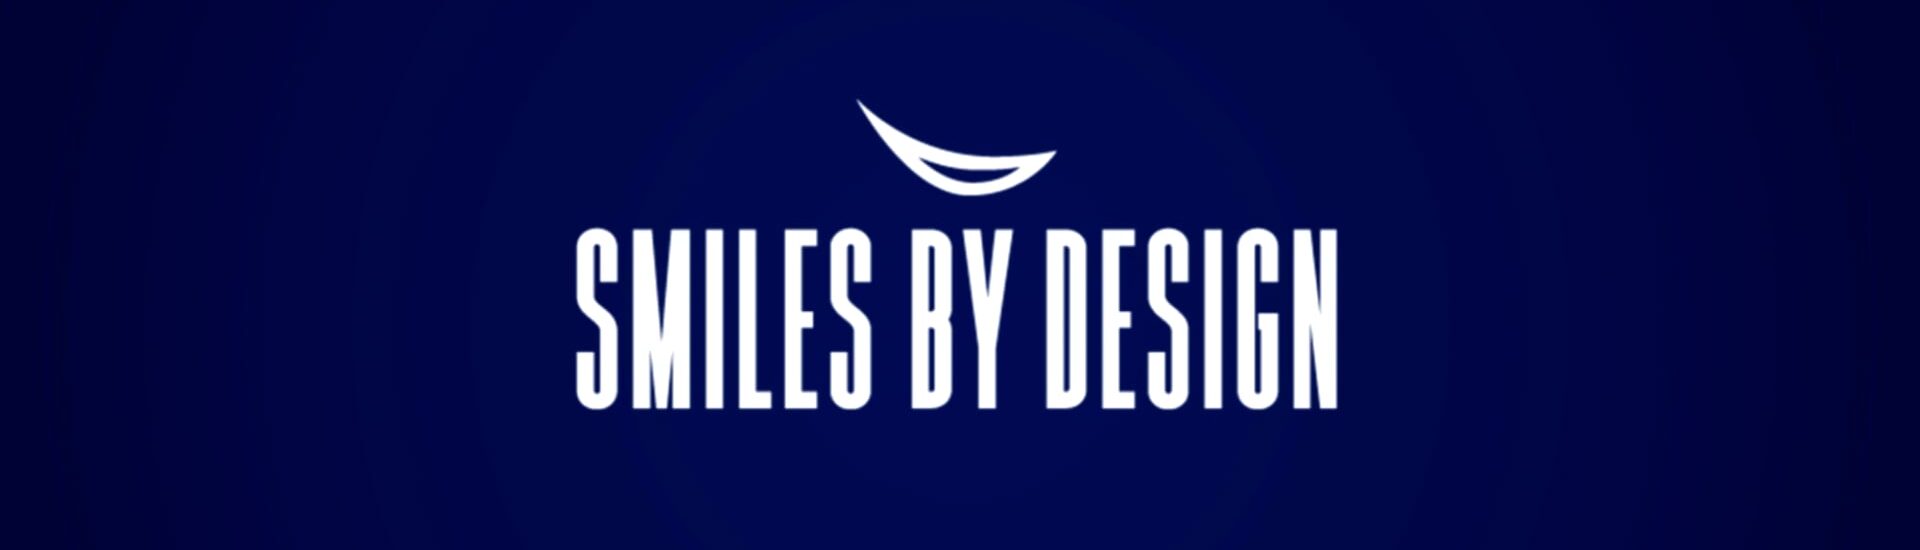 Smiles By Design - Burbank Dental Lab - Burbank, CA